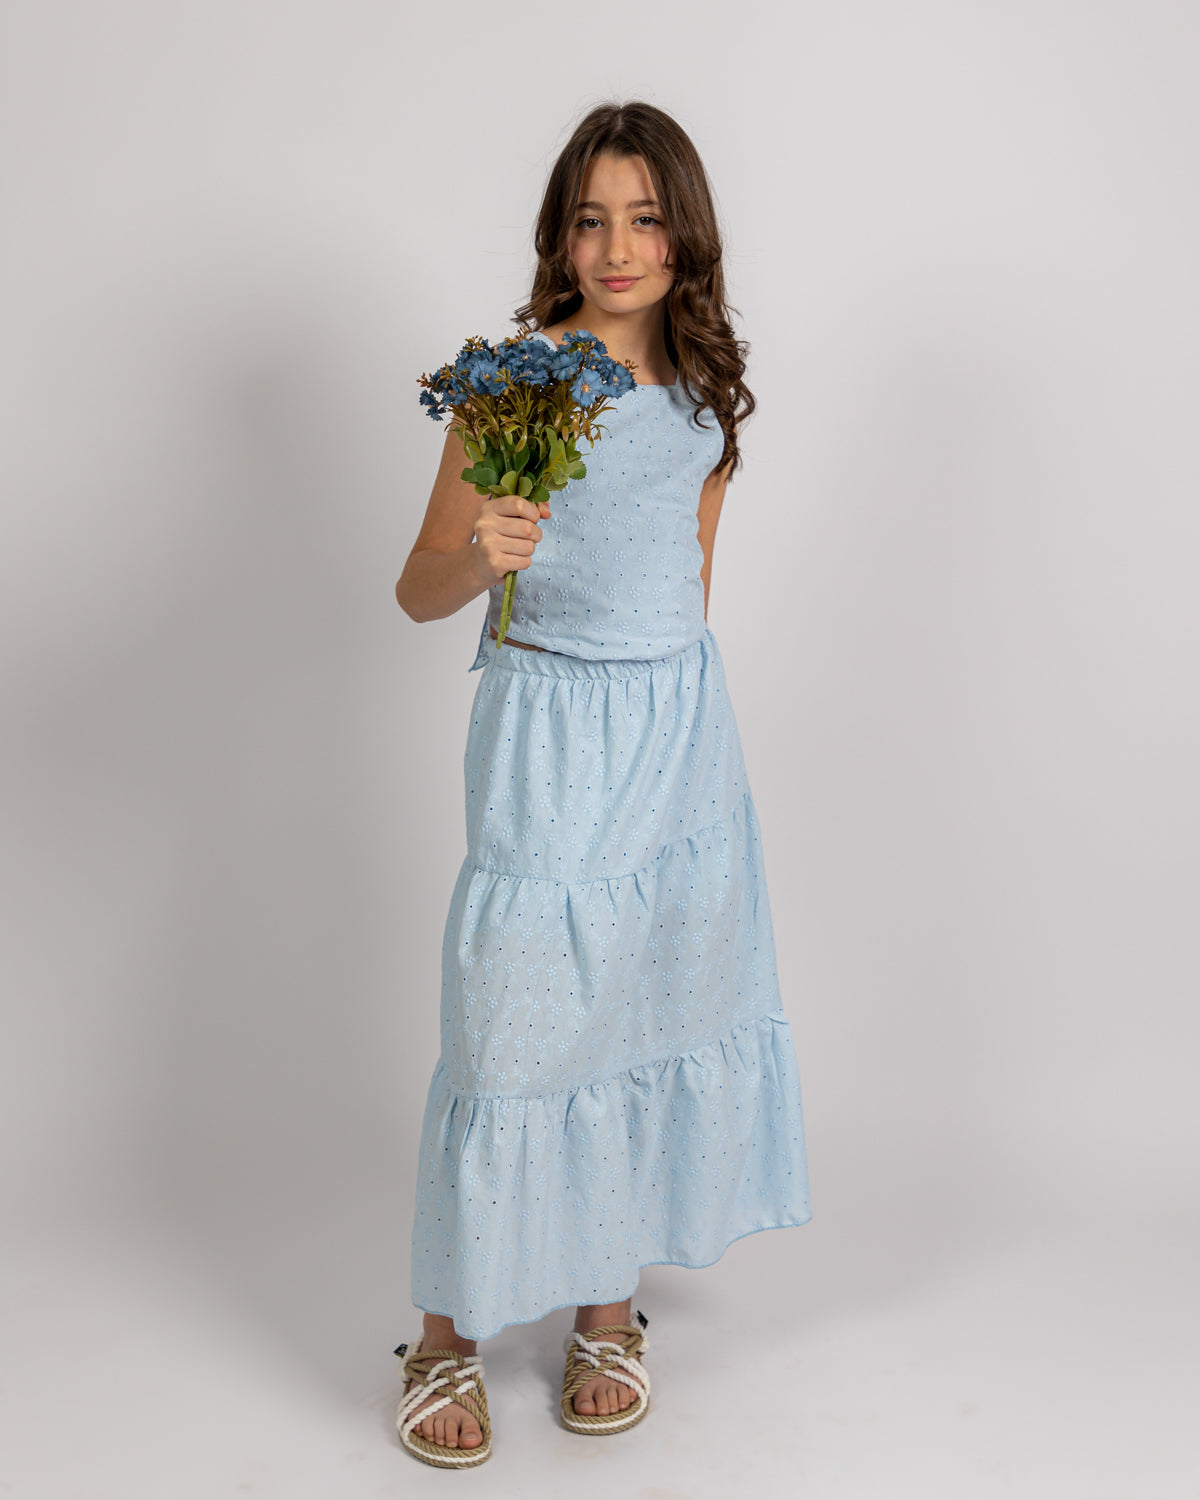 Broderie Anglaise Top + Long Skirt Set For Girls - Blue